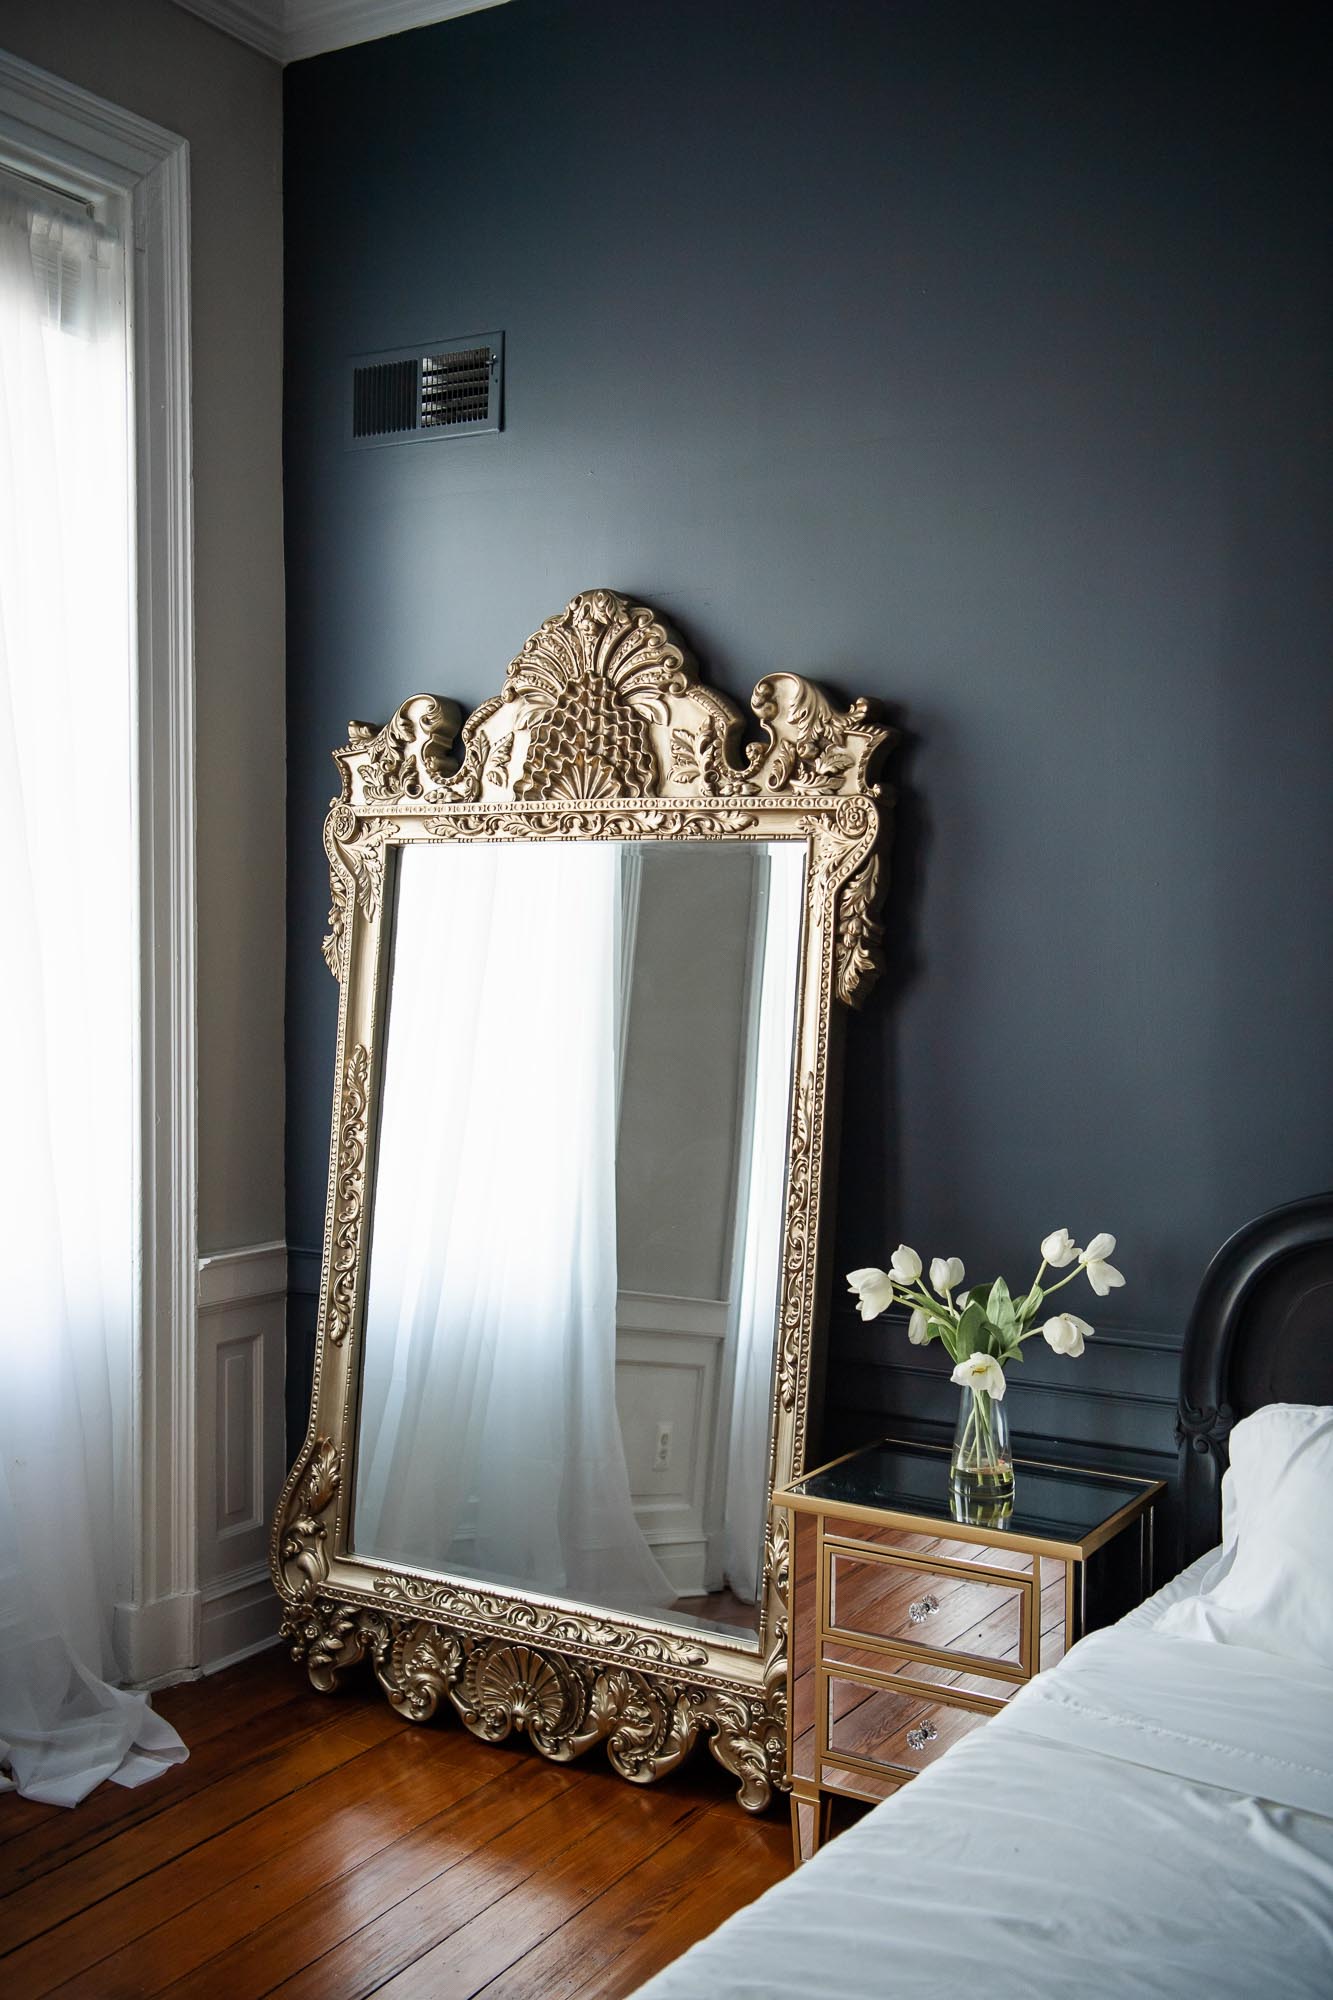 Boudoir studio in Virginia featuring bedroom set with luxury mirror and decor.